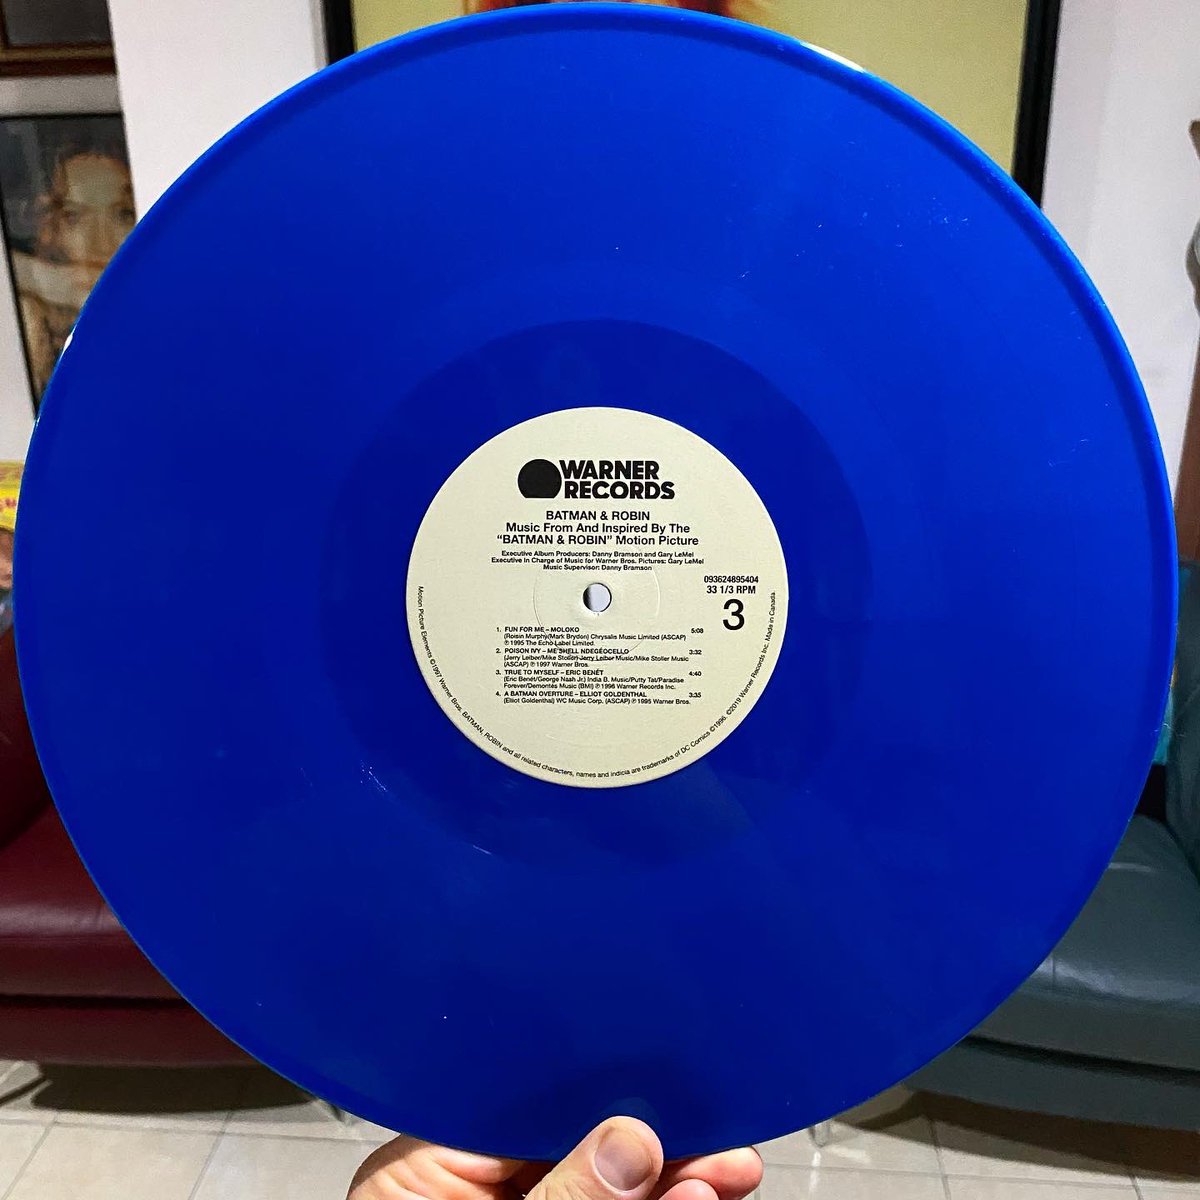 De 1997, “Batman & Robin”.
***
#BatmanAndRobin #Soundtrack #SmashingPumpkins #Moloko #RecordStoreDay #RSD #RSD20 #RSDDrops  #RSDDrops2 #Vinyl #VinylCollector #VinylCollectionPost #VinylCommunity #VinylJunkie #ColoredVinyl #MúsicaEnColores #JusticiaPop #CinemaSound